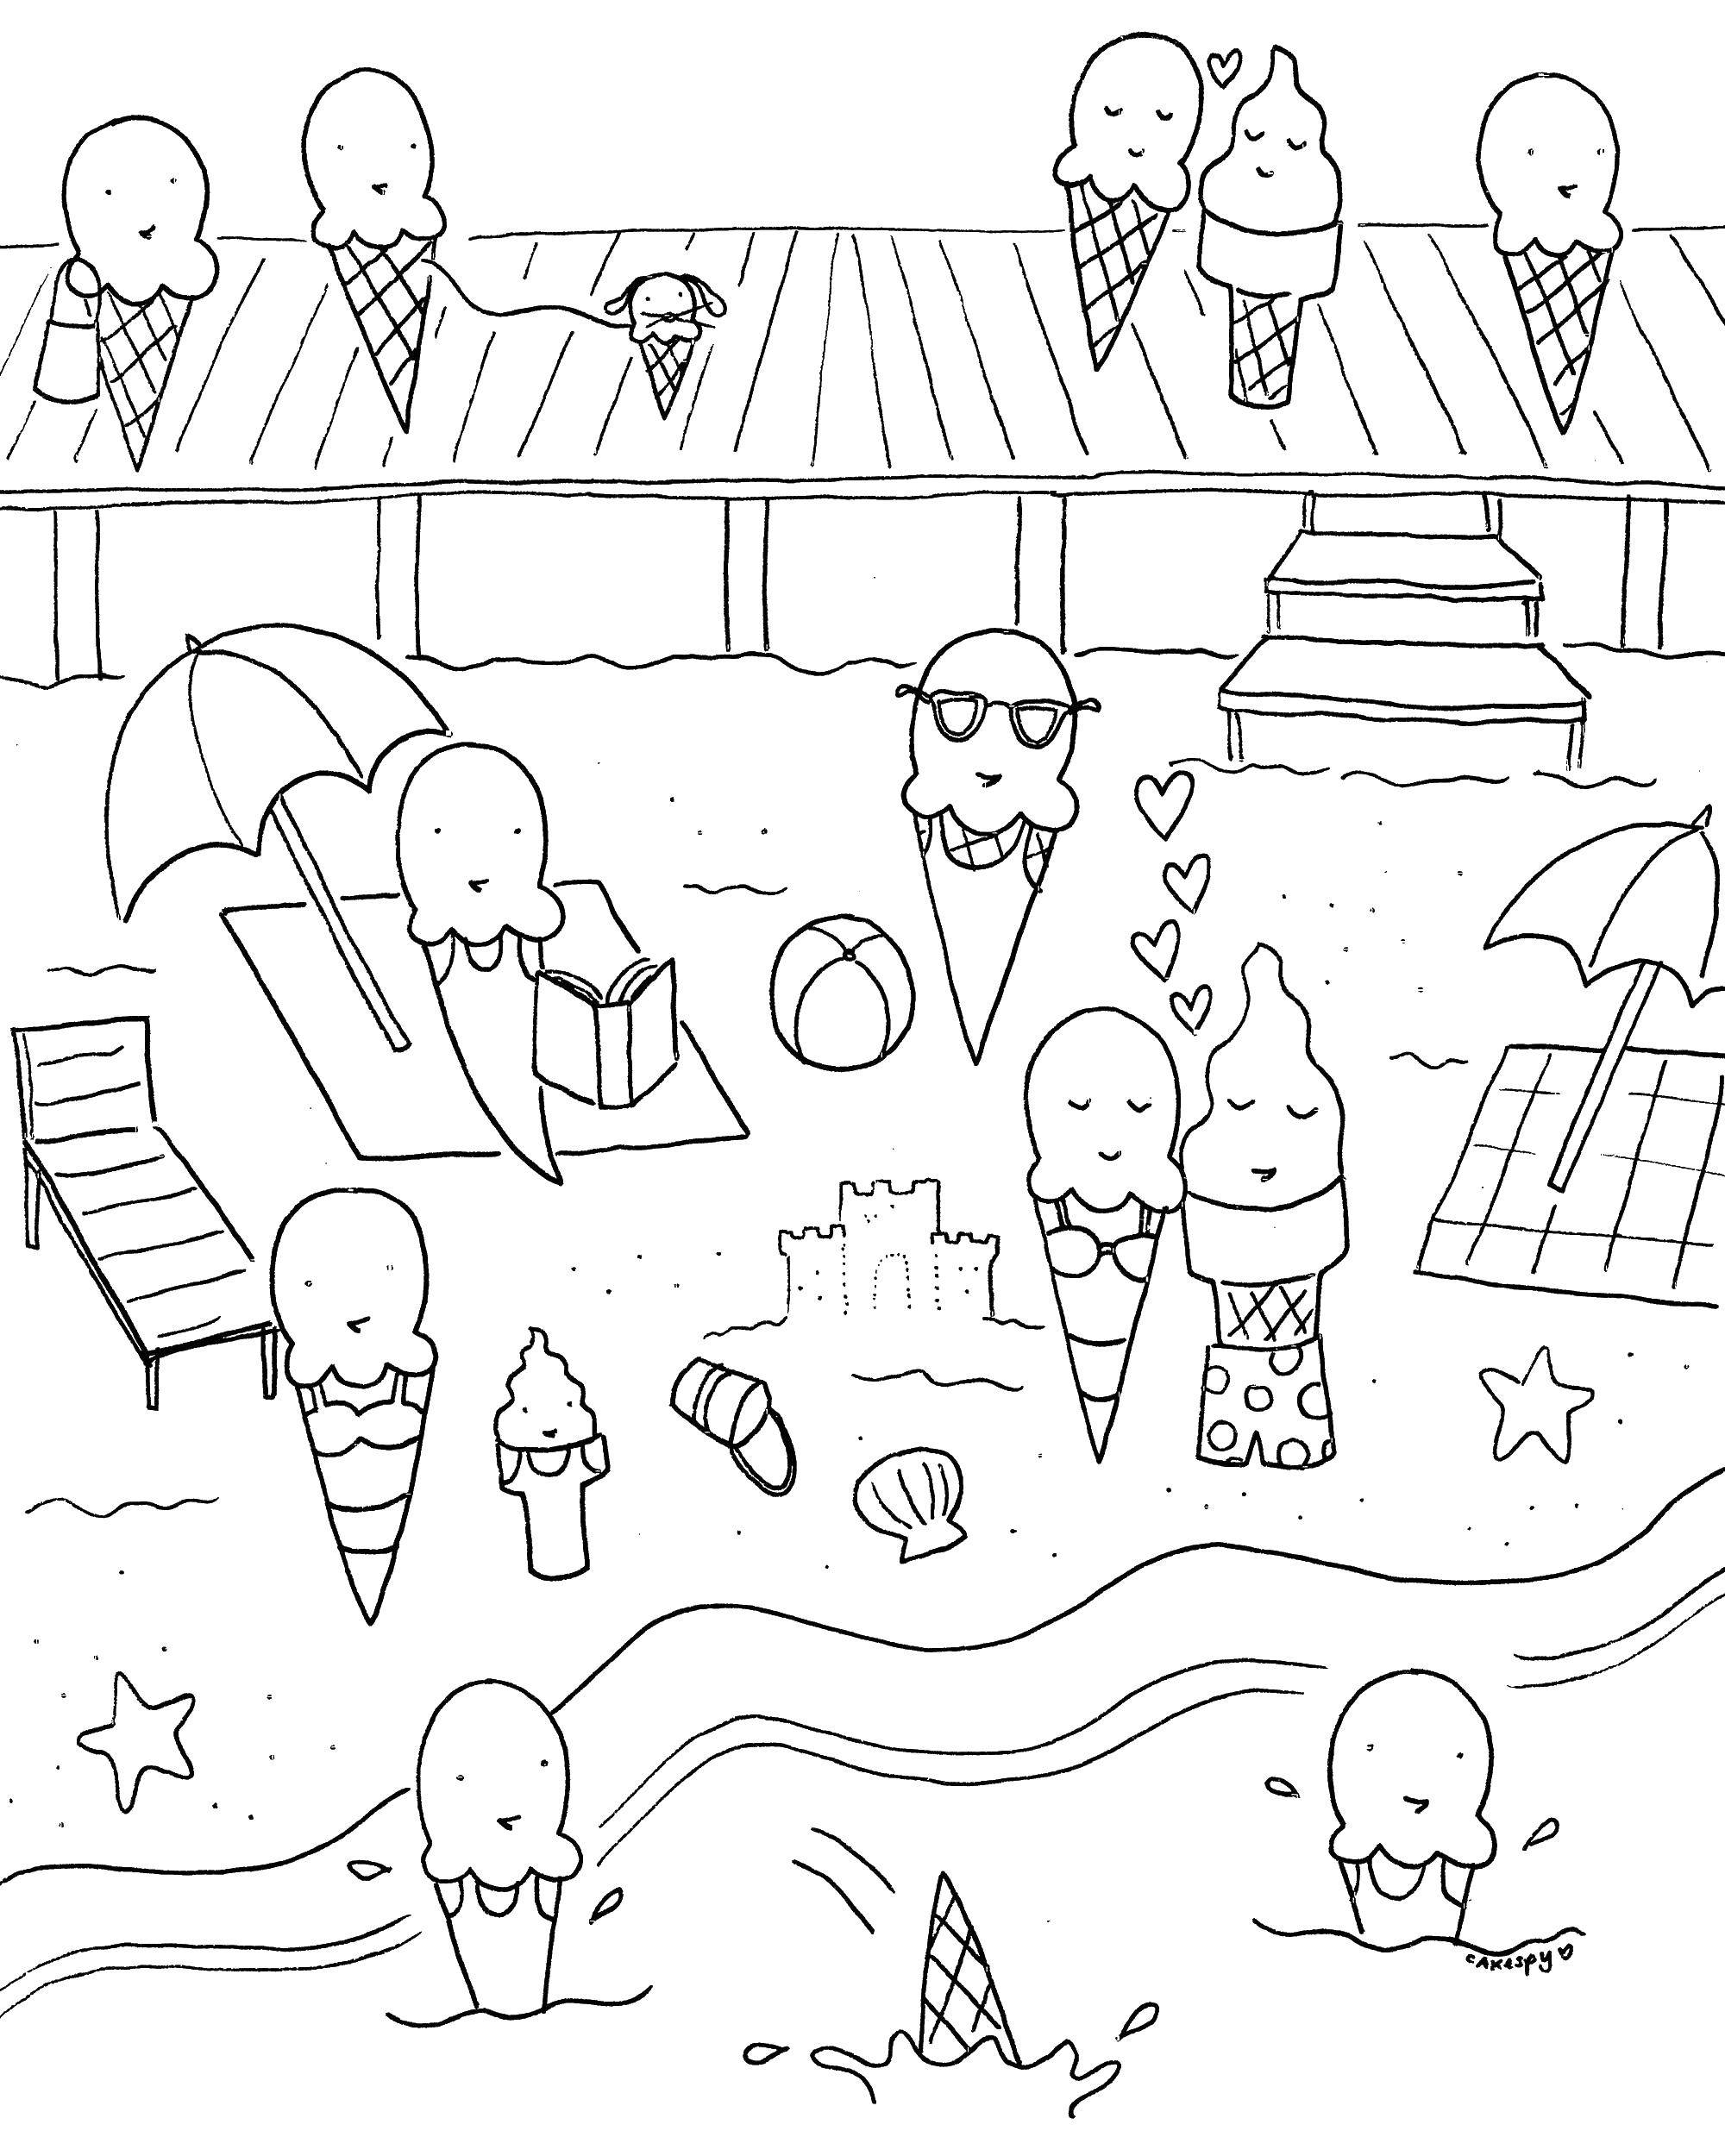 Название: Раскраска Мороженное на пляже. Категория: Летние развлечения. Теги: лето, мороженное, пляж, песок.